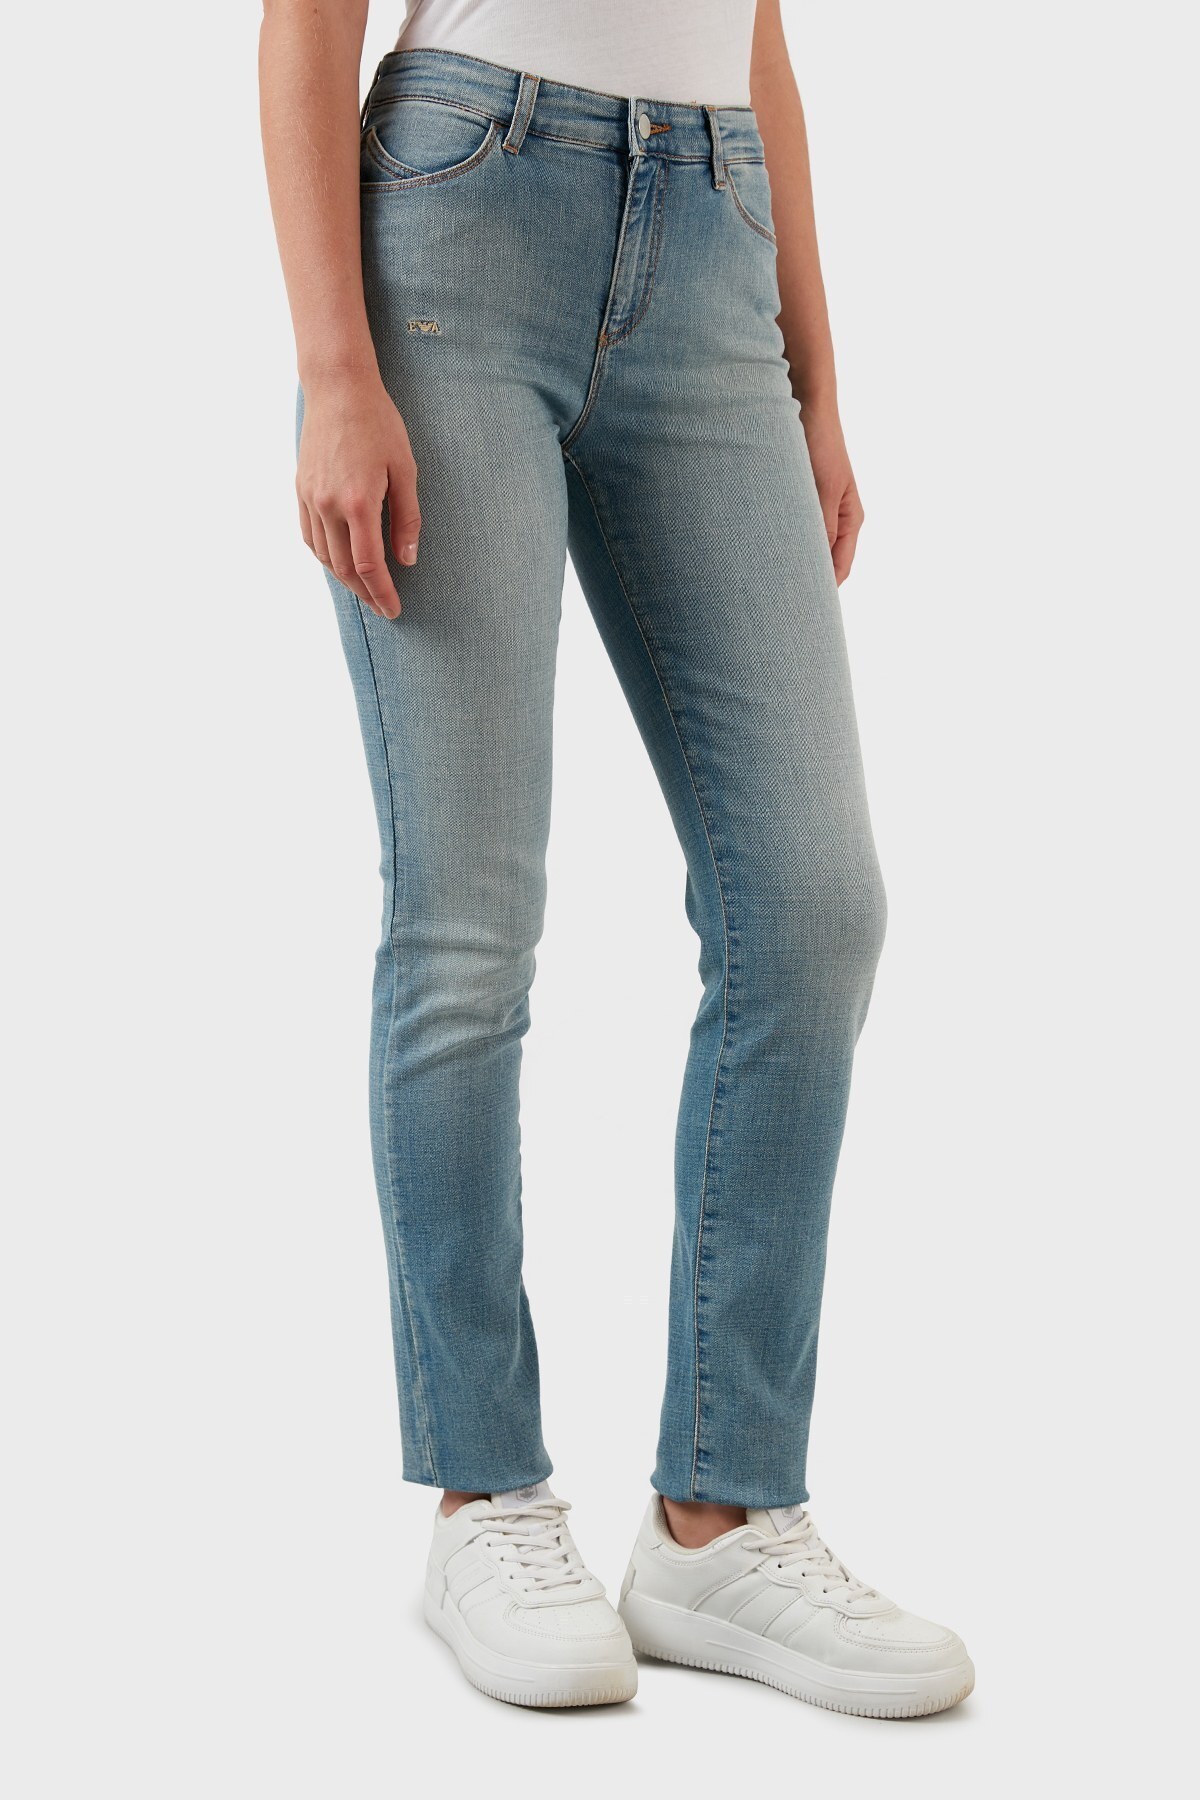 Emporio Armani Pamuklu Yüksek Bel Slim Fit Jeans Bayan Kot Pantolon 3L2J18 2DQ0Z 0941 MAVİ